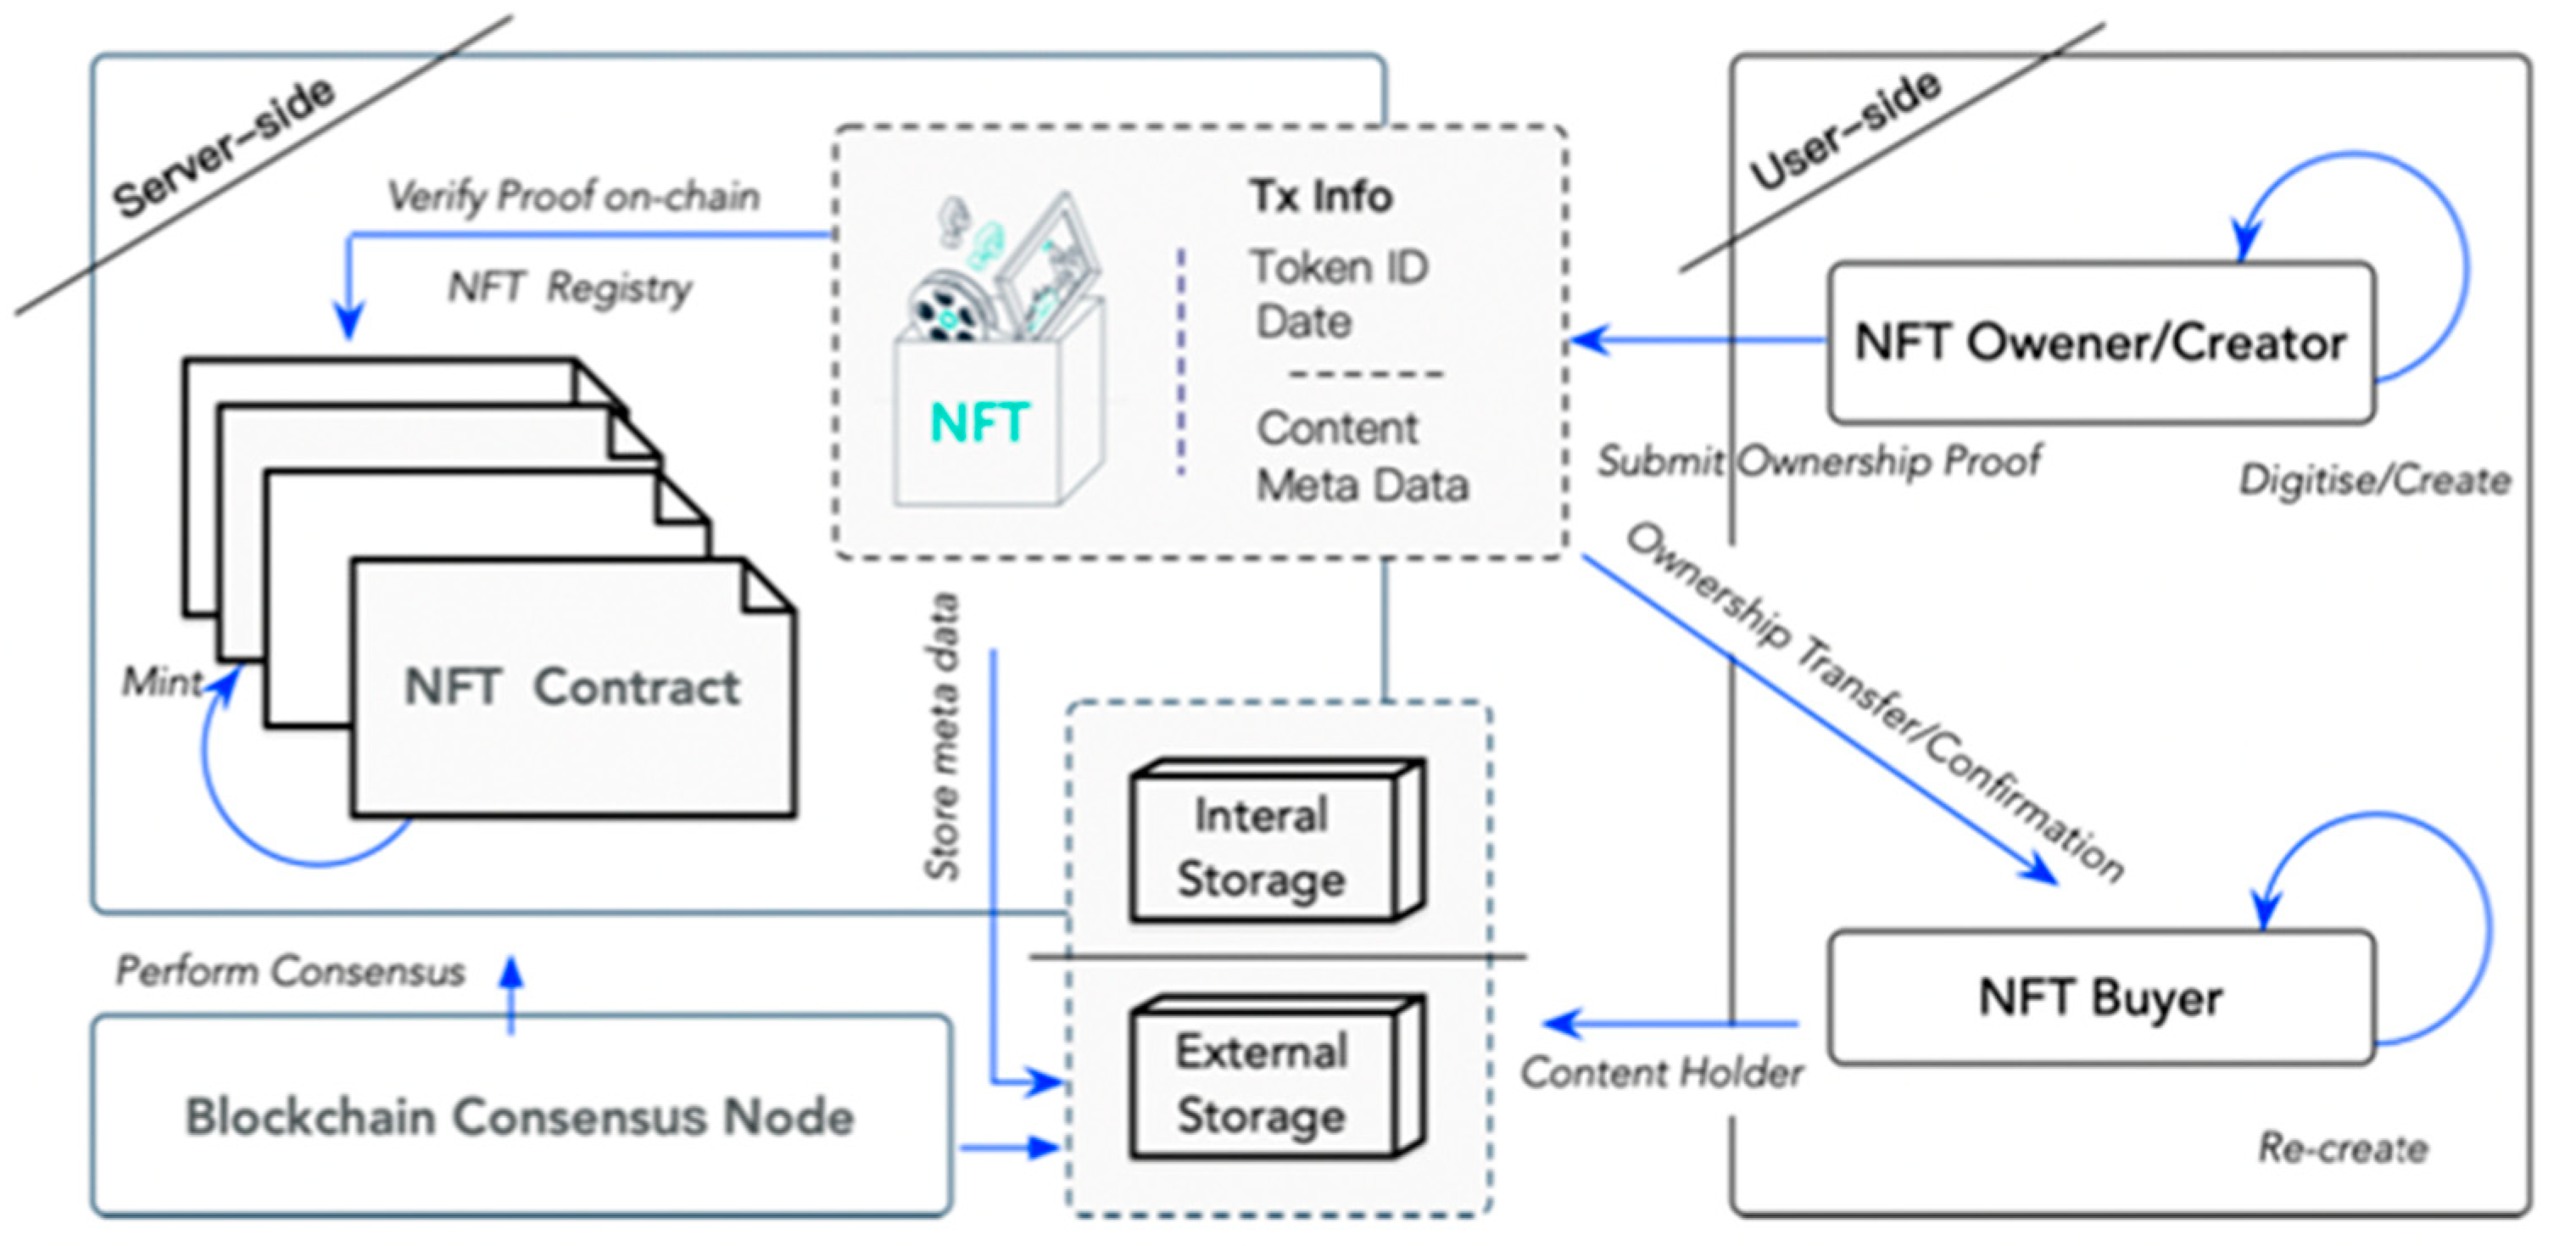 OpenSea smart contract upgrade to delist inactive NFTs on Ethereum